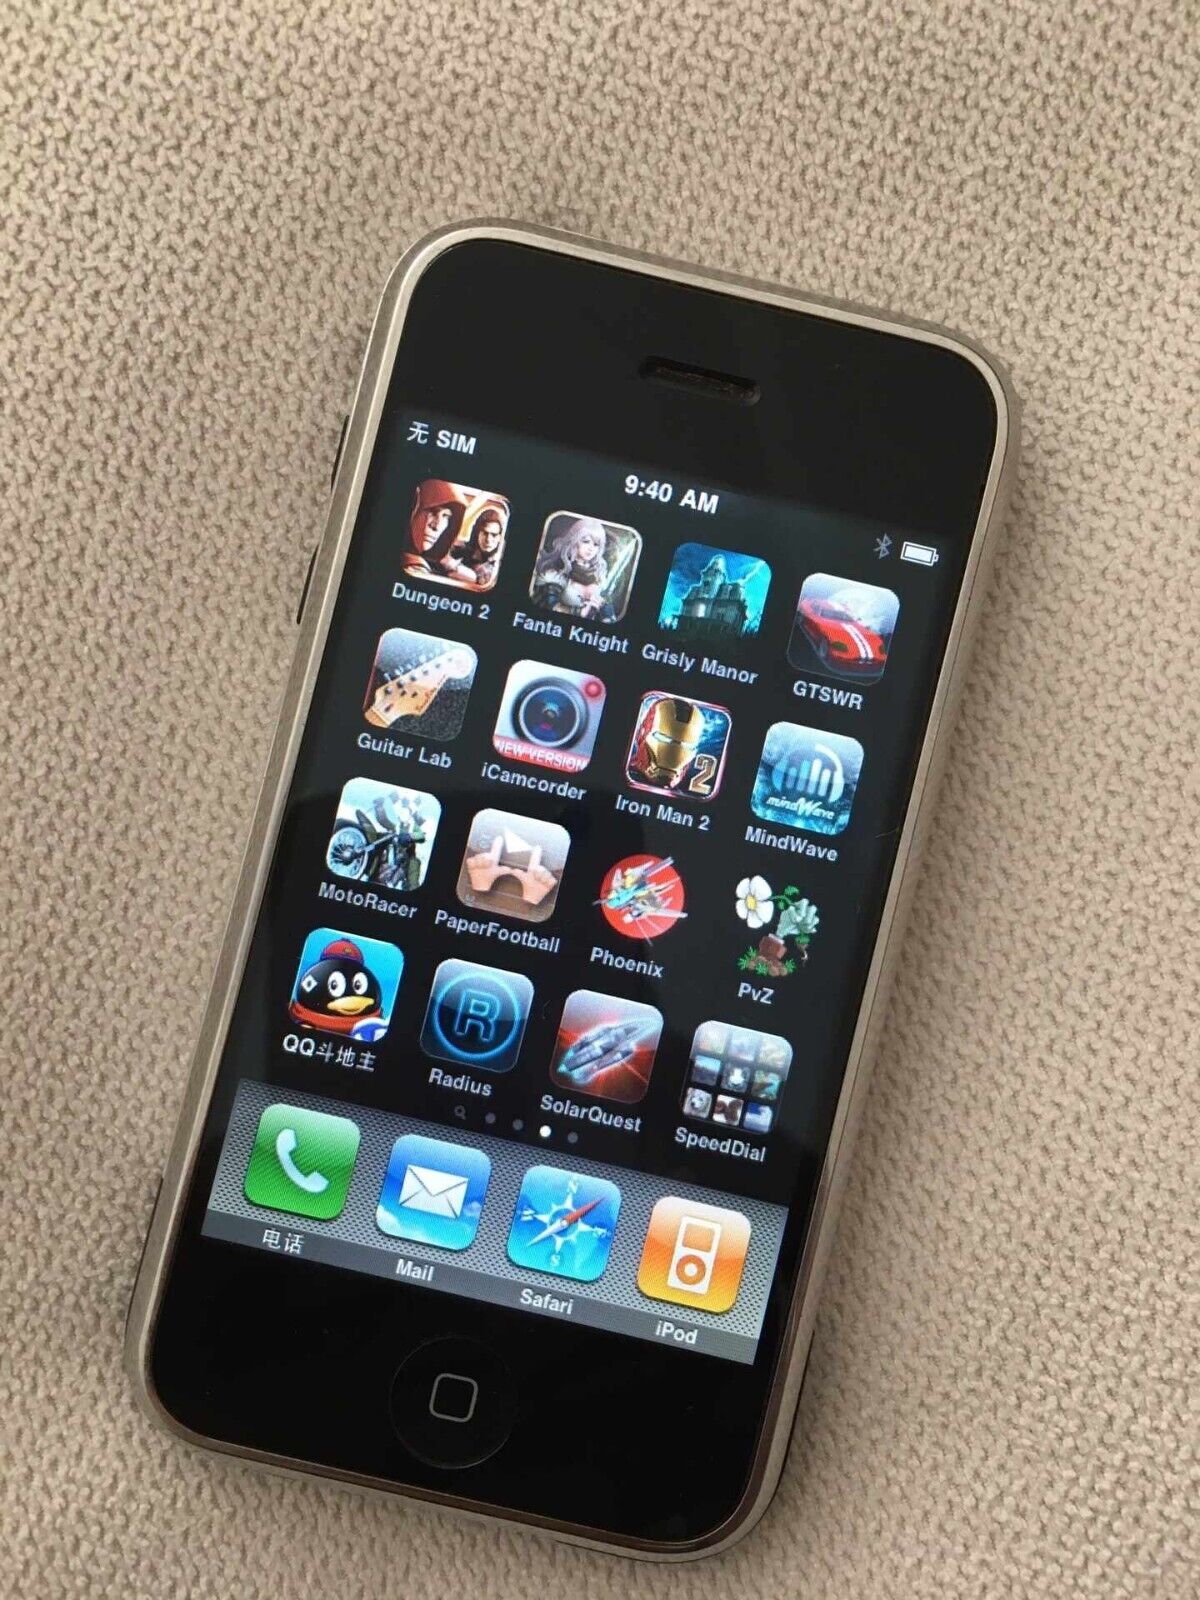 Apple iphone 1st Generation 8GB unlocked 2G GSM jailbroken games IOS3